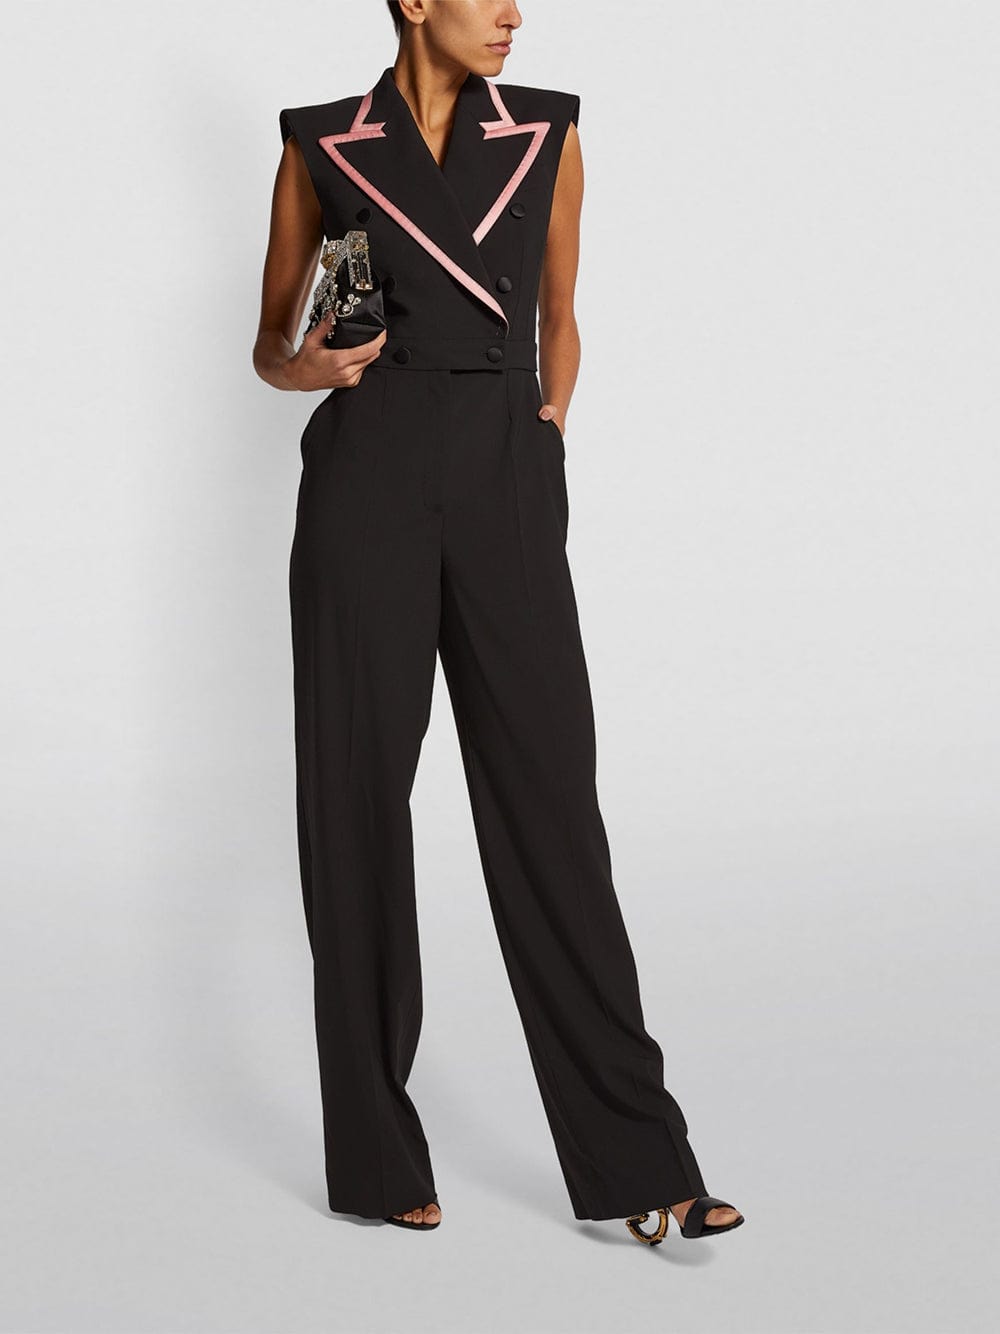 Dolce & Gabbana Tuxedo Jumpsuit